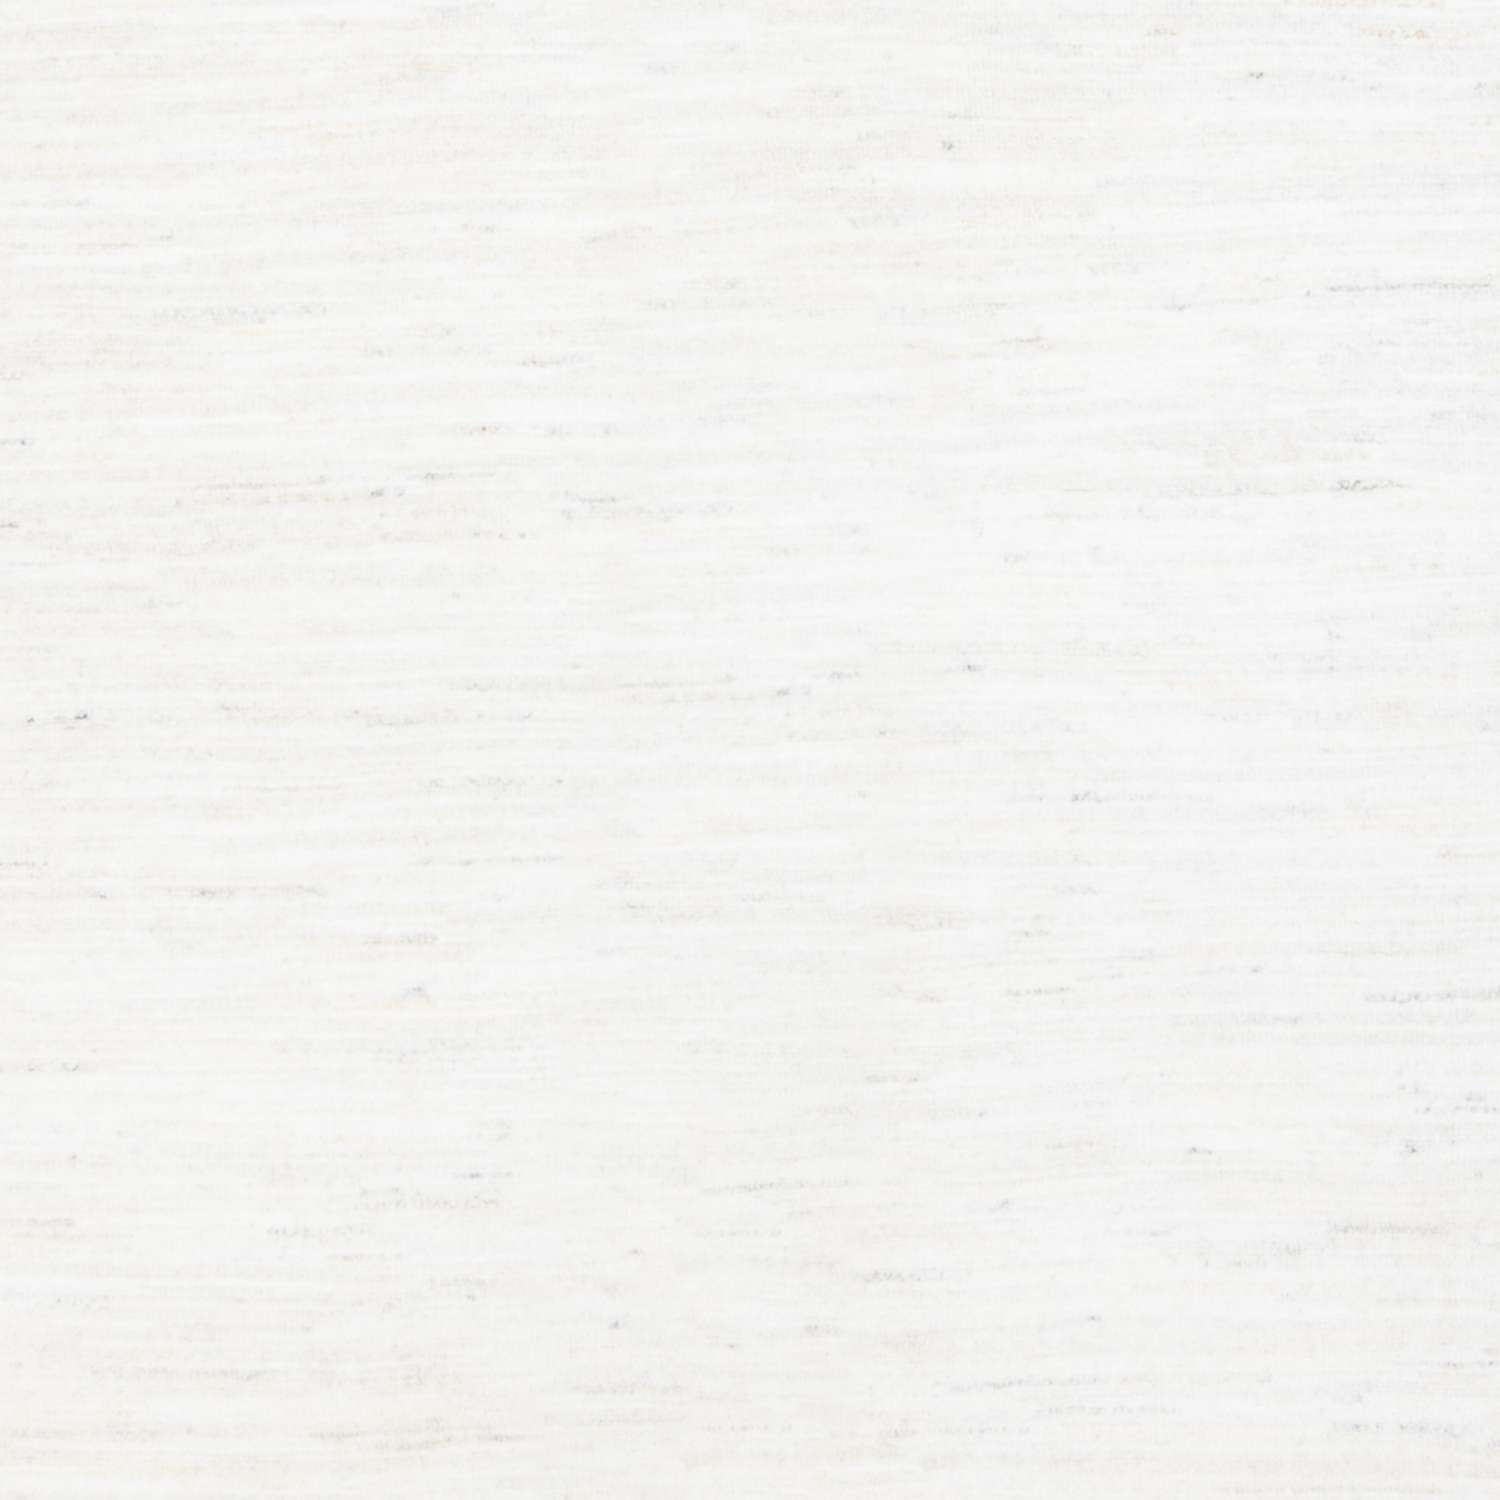 Gabbeh tapijt - Perzisch - 234 x 168 cm - wit  crème